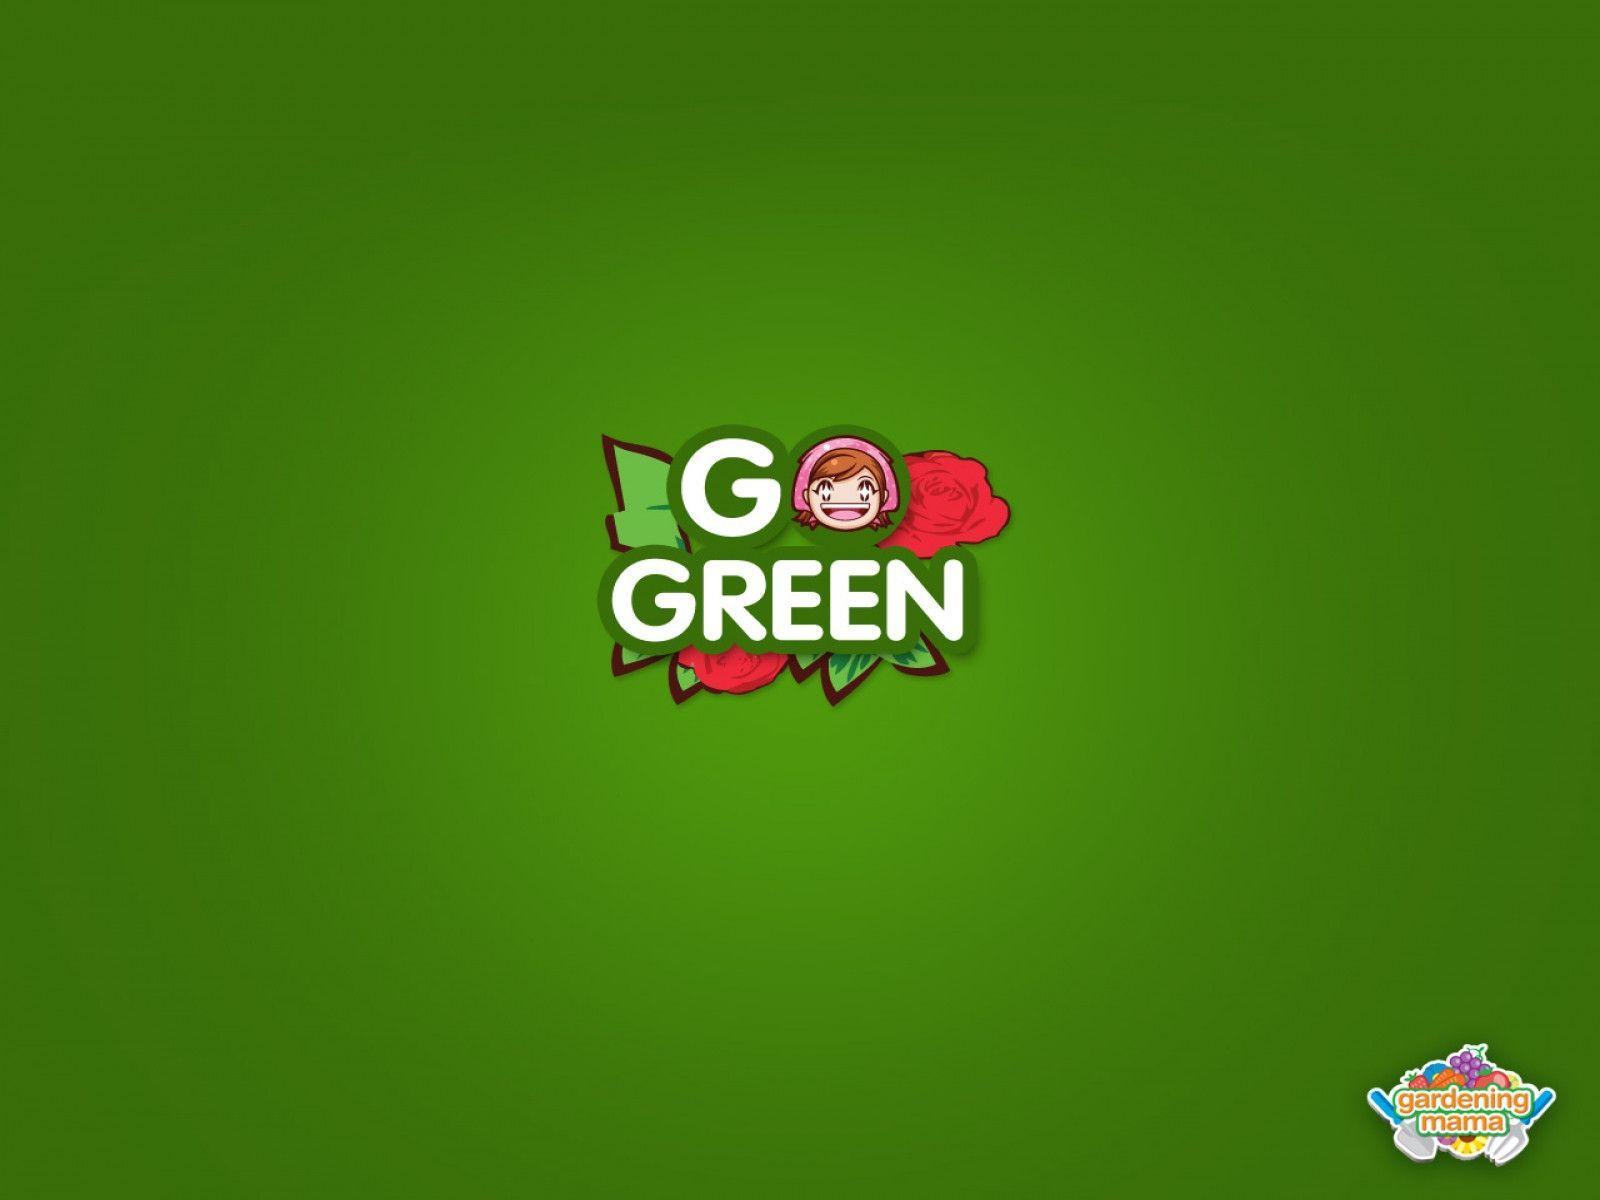 Go Green wallpaper 240660